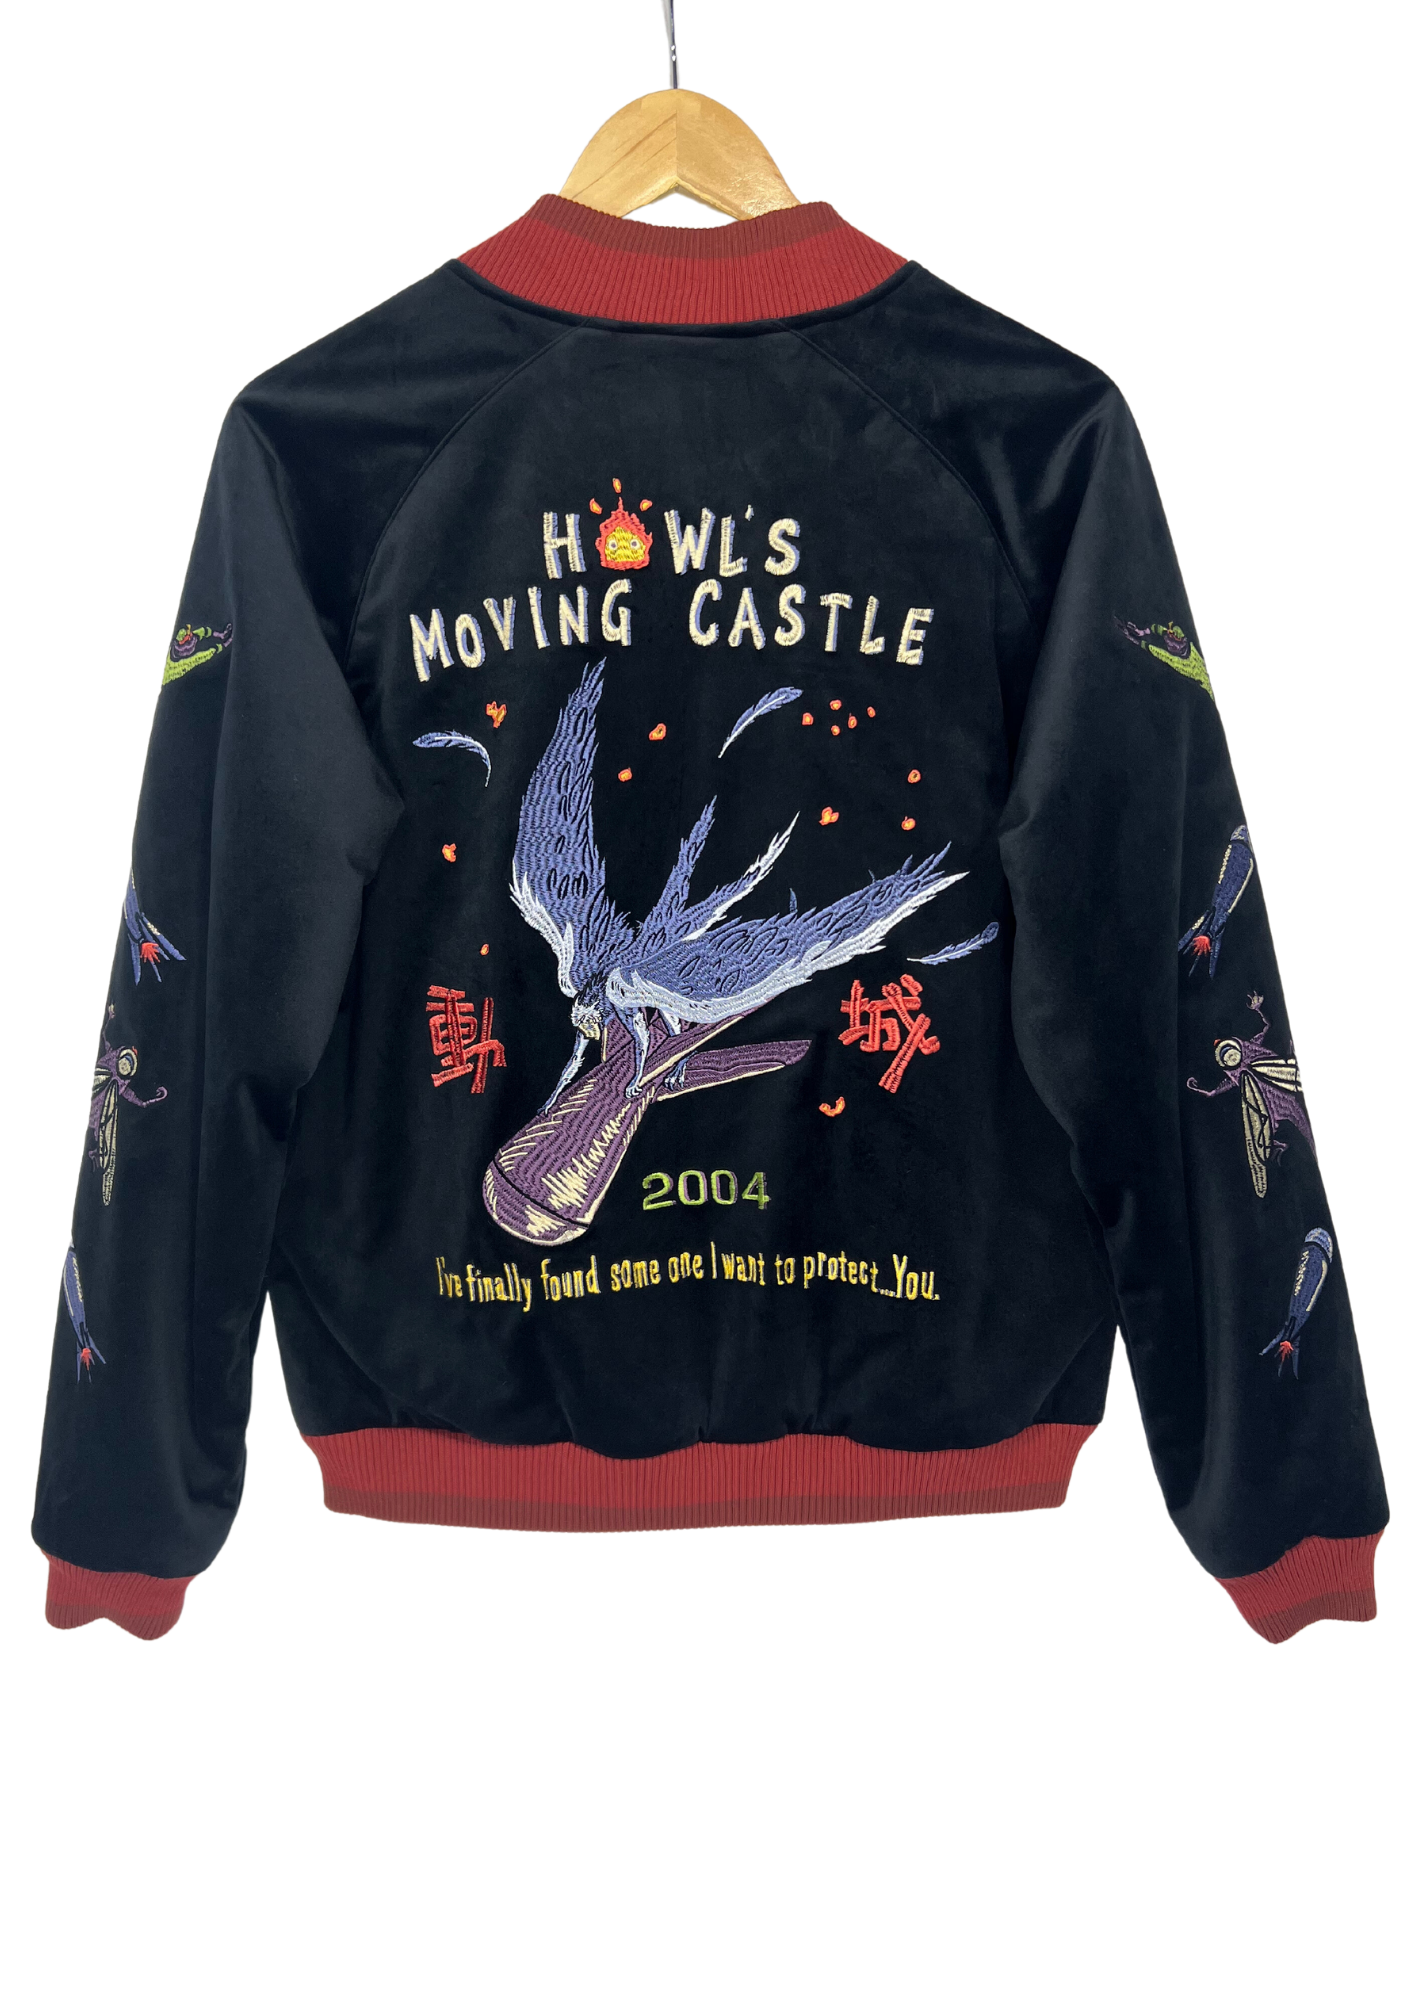 Howl's Moving Castle x GBL Jacket